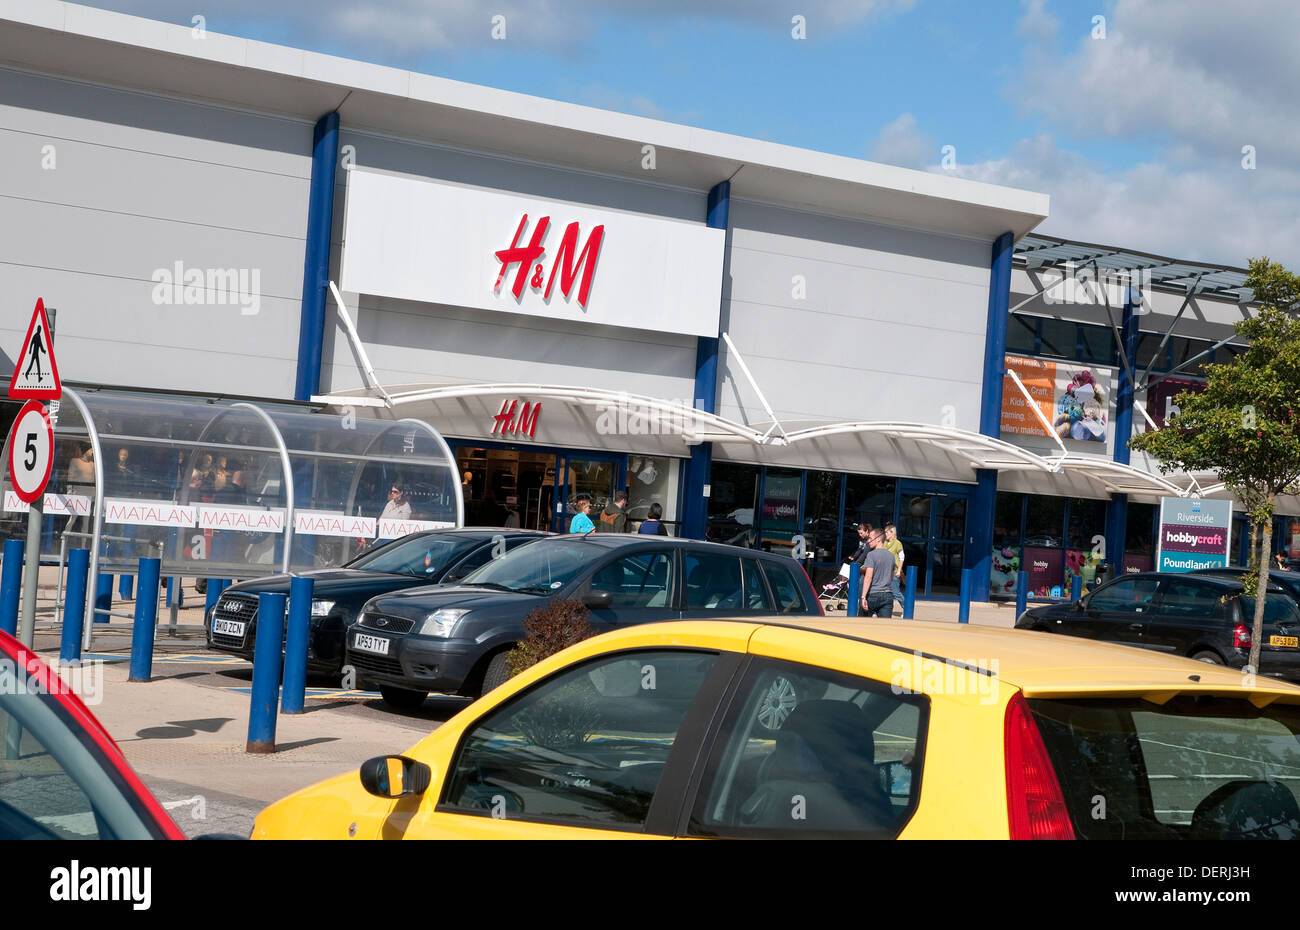 H & M store, norwich, norfolk, england Stock Photo - Alamy